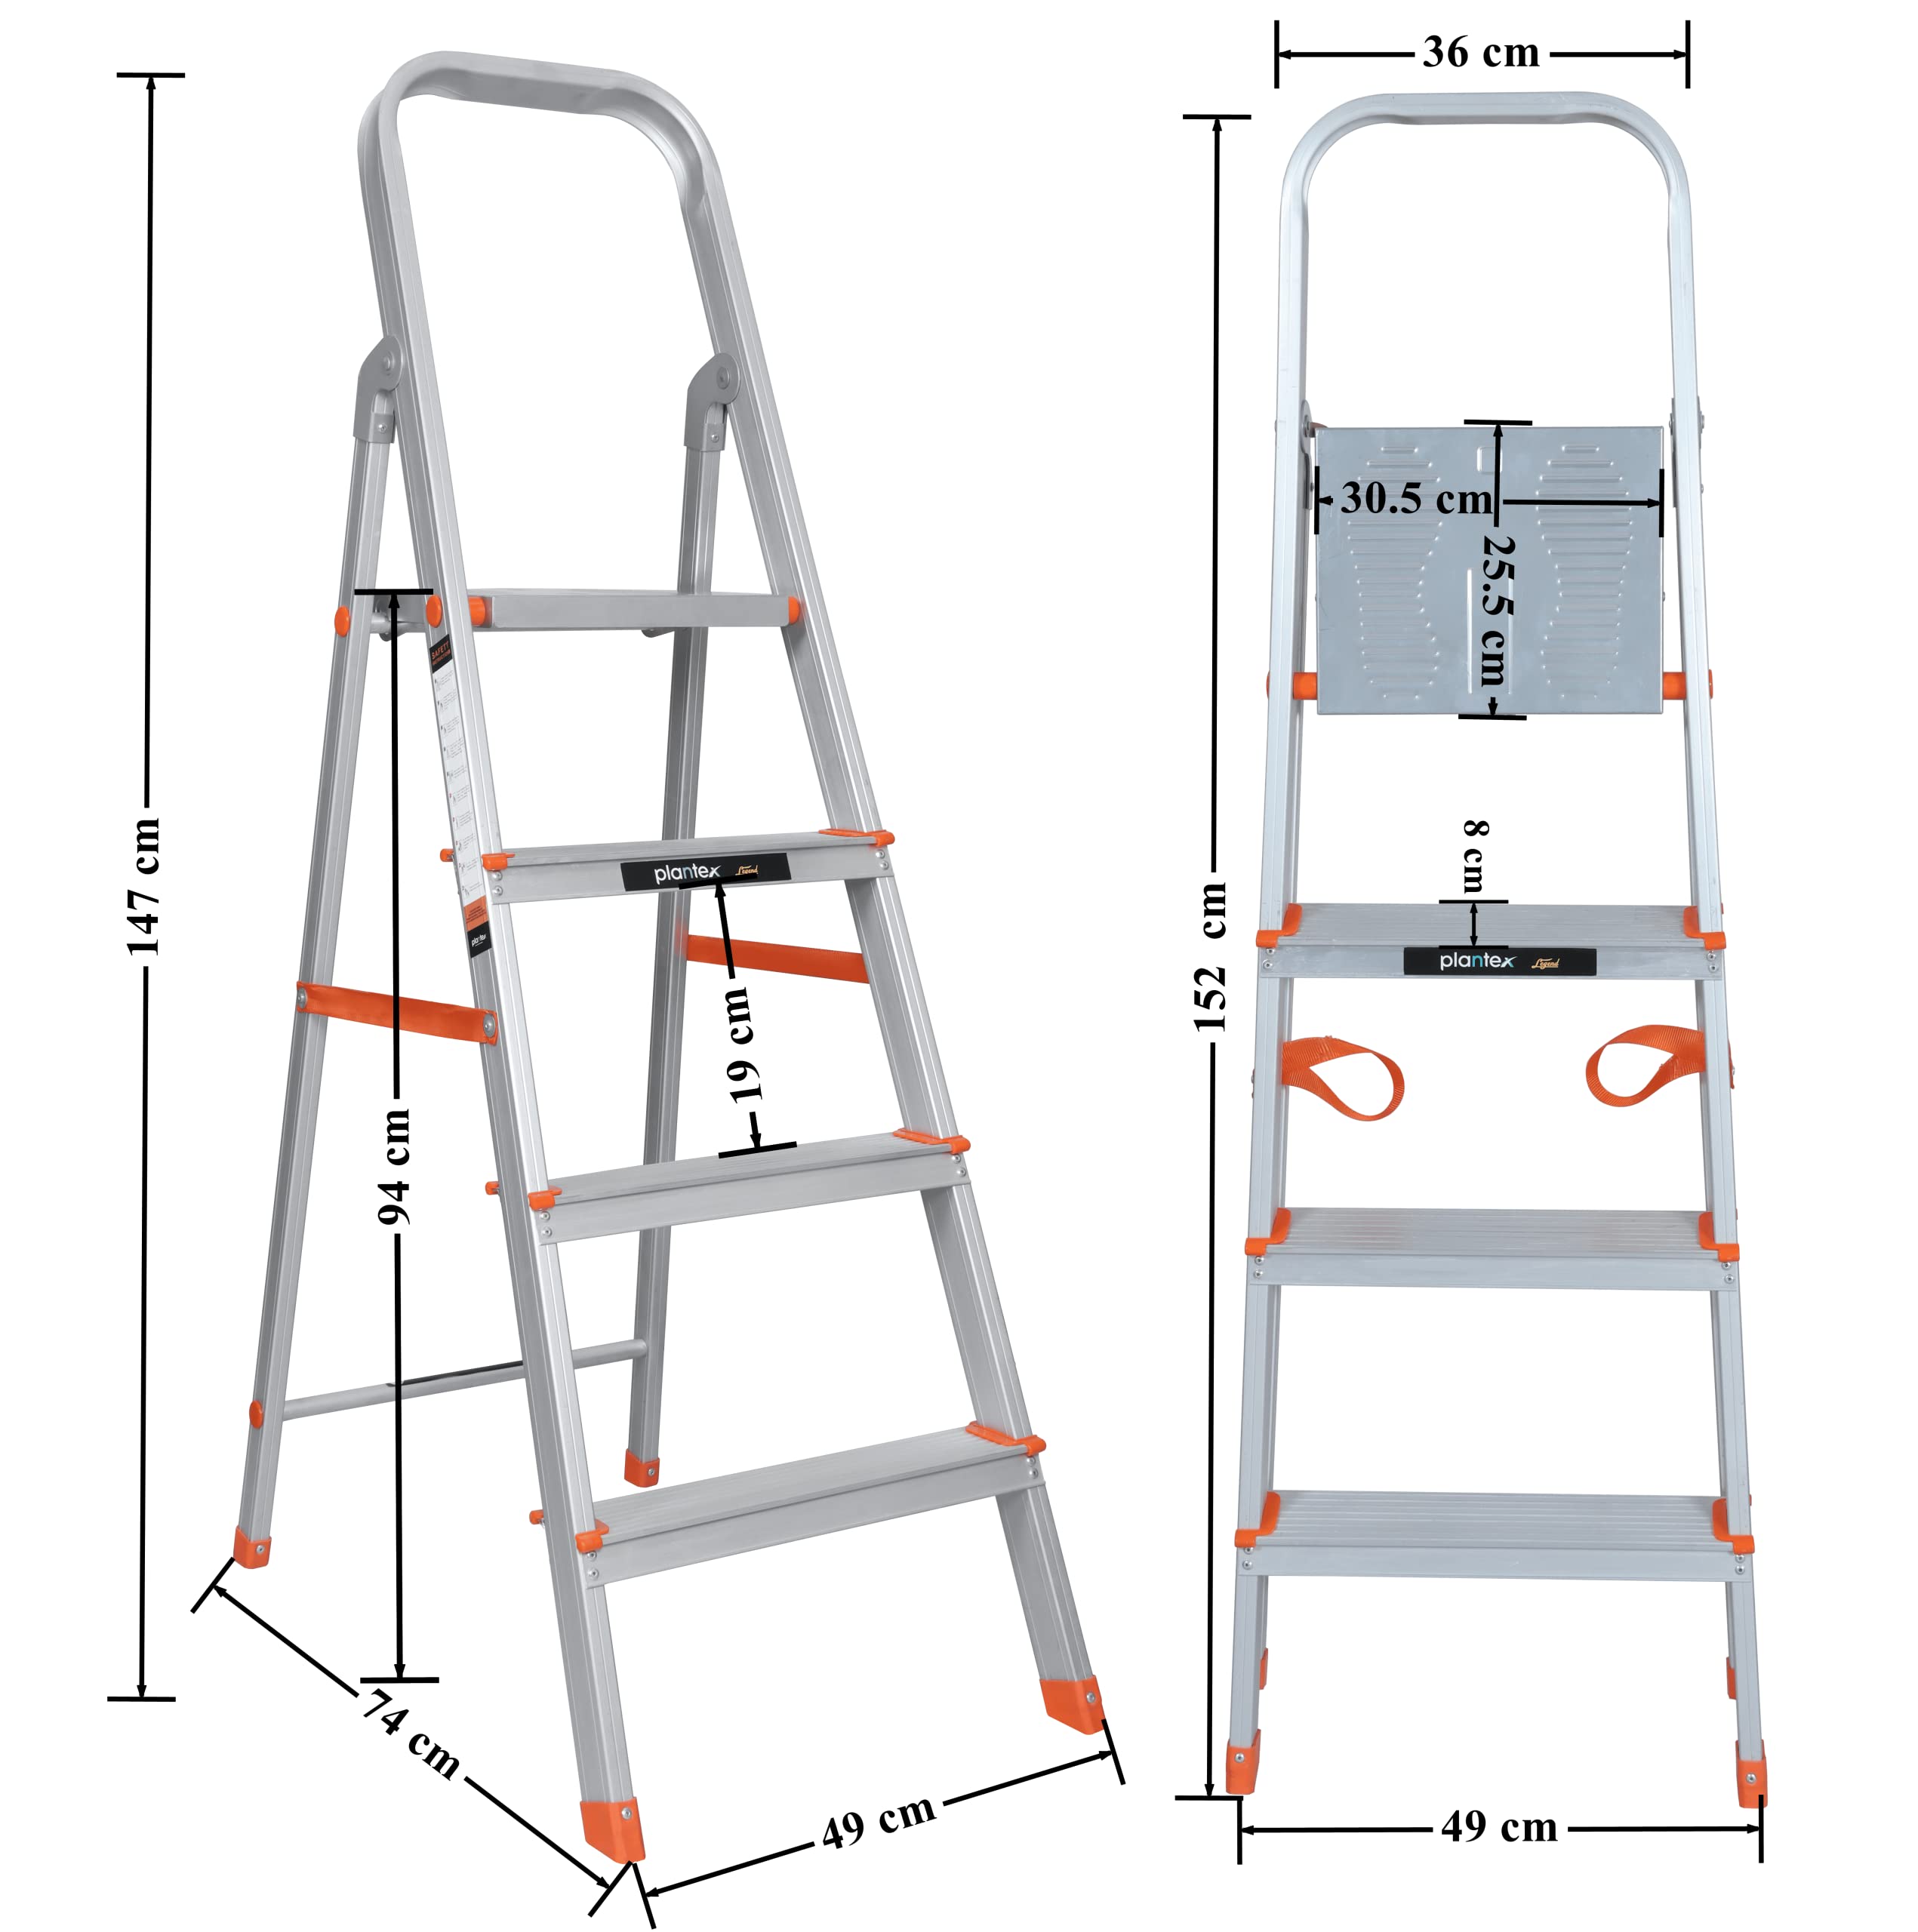 Plantex Restructured Legend Aluminium Folding 5 Step Ladder for Home - 5 Wide Step Ladder (Orange-Silver)